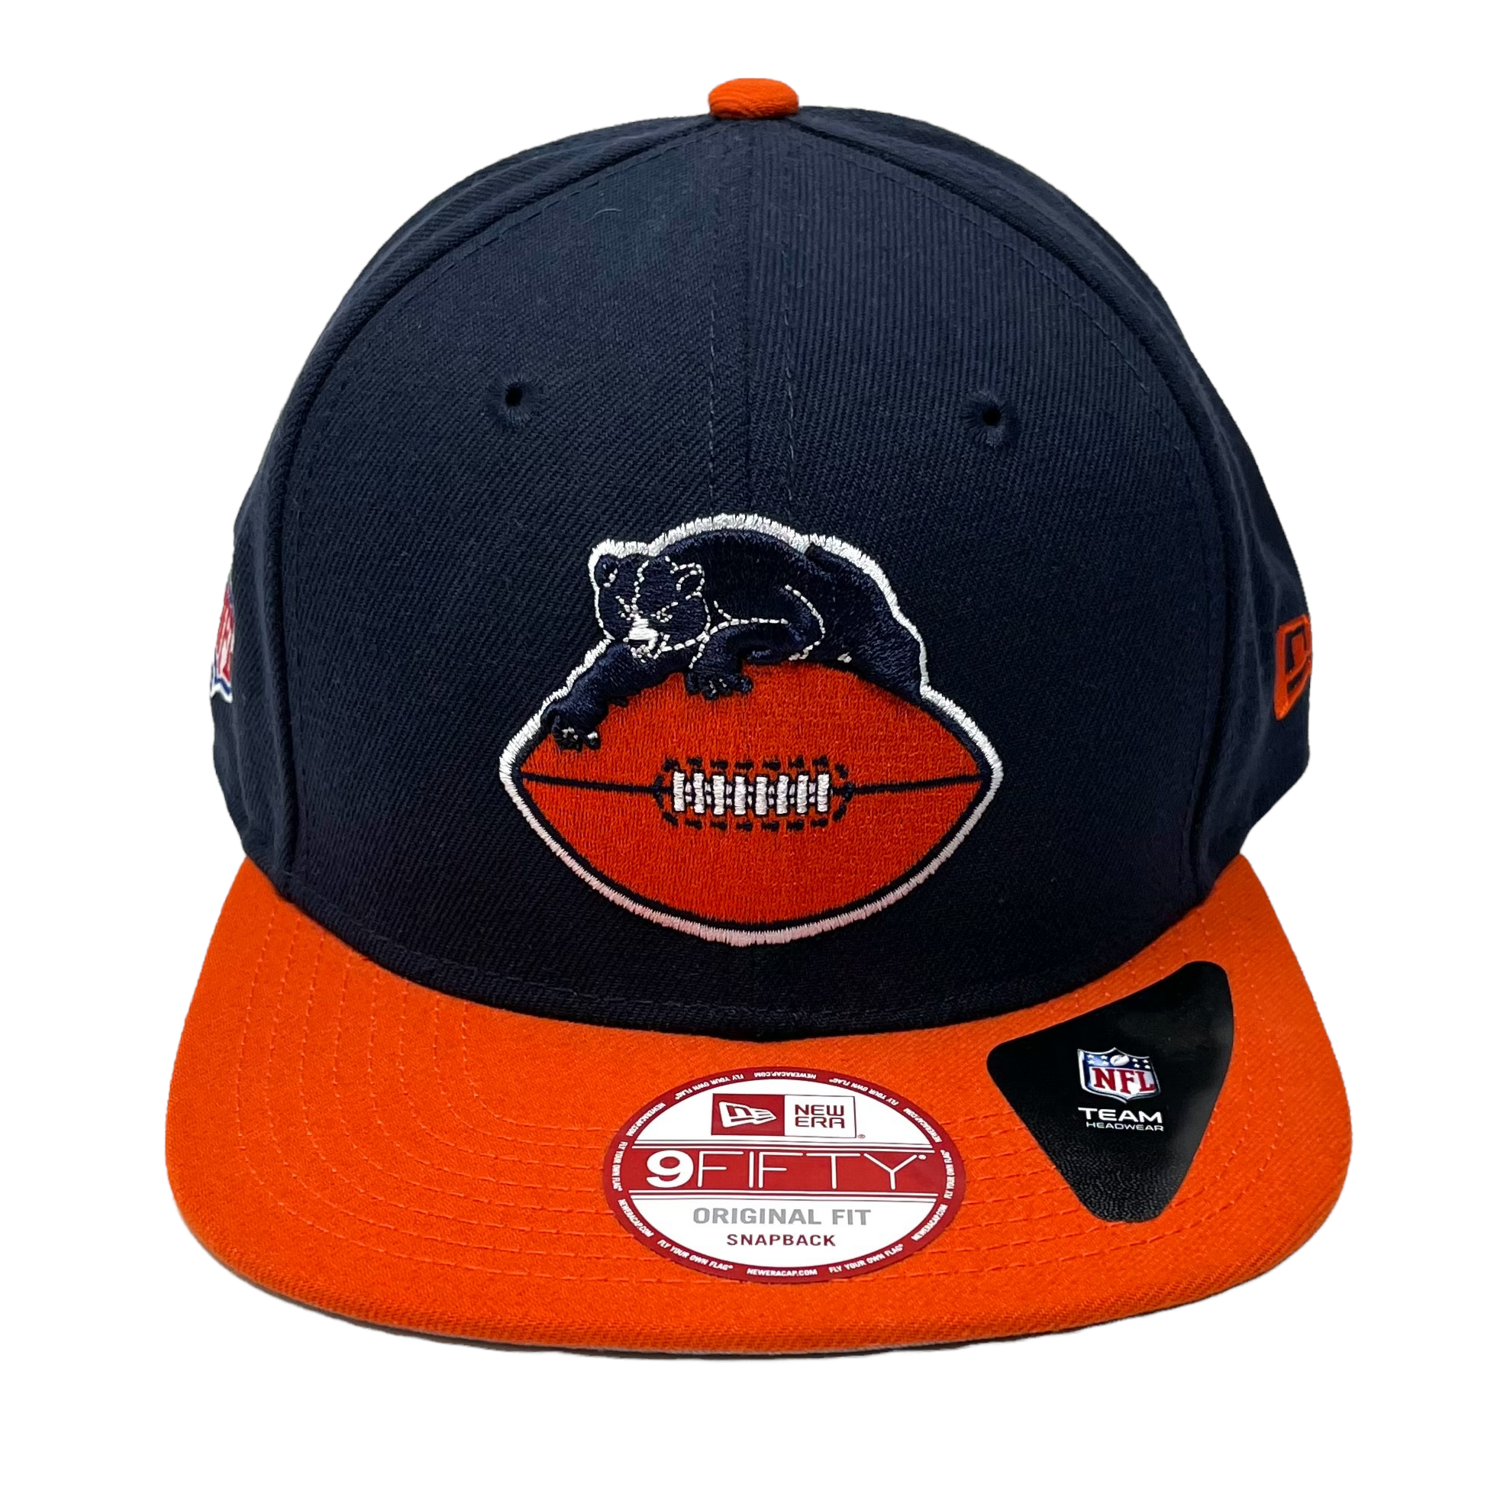 Chicago Bears New Era Original Fit Snapback Hat